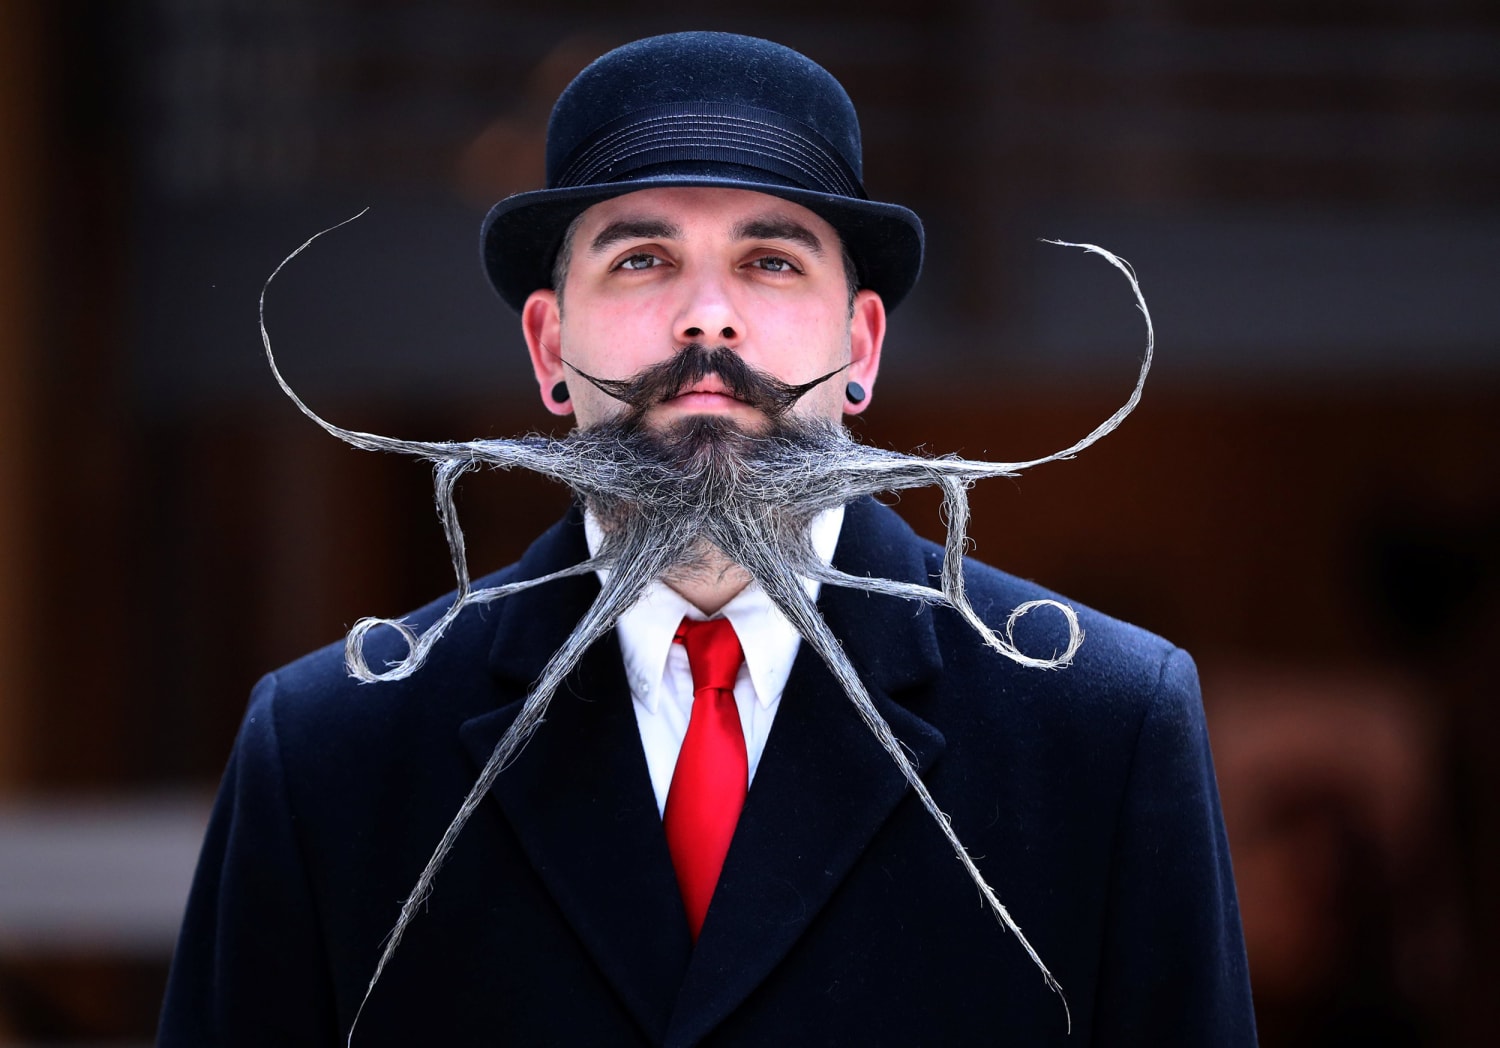 2019 World Beard and Moustache Championship in Antwerp, Belgium